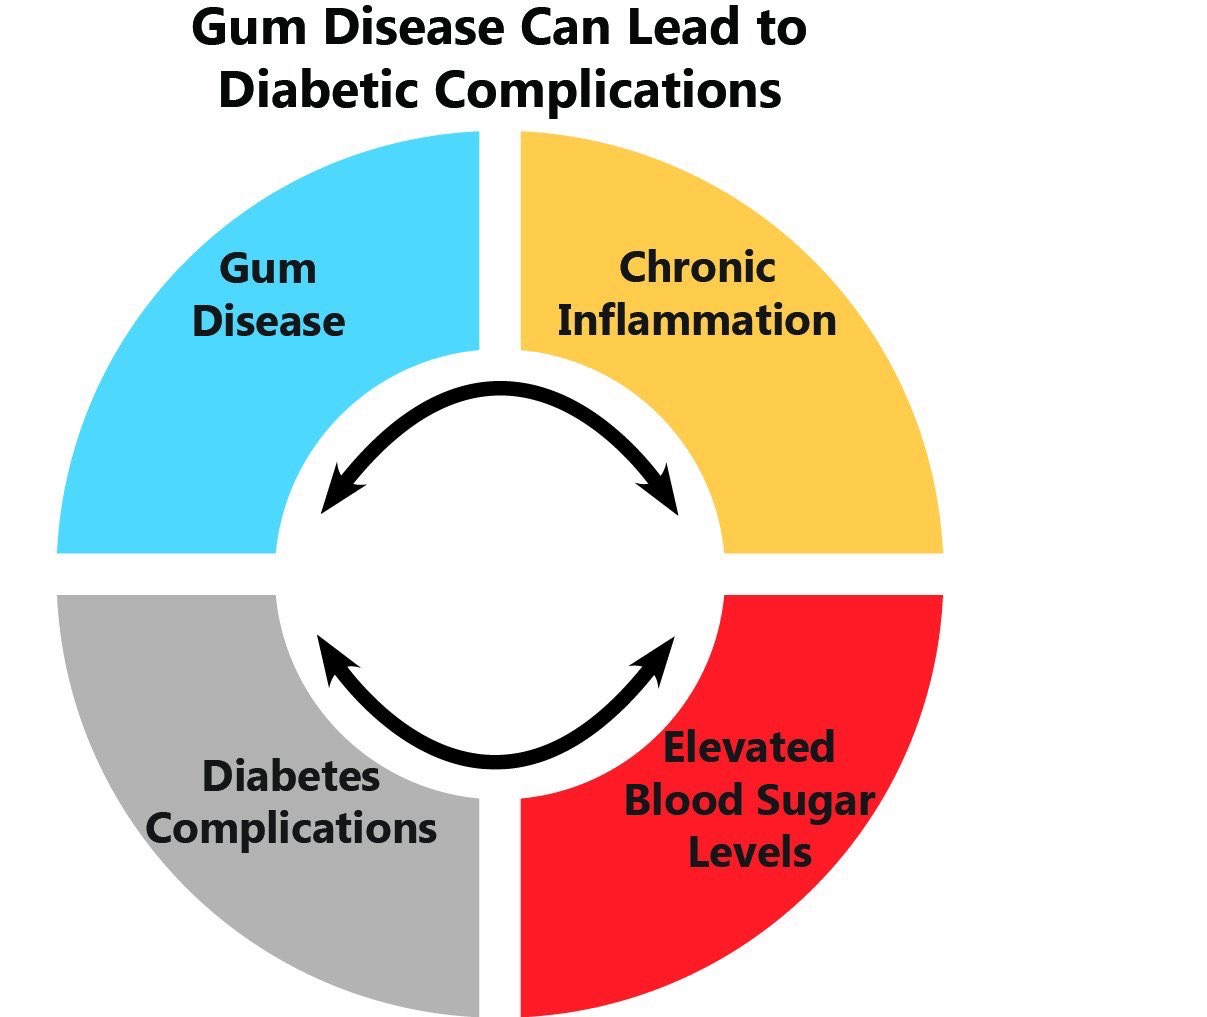 The gum disease, diabetic complications cycle